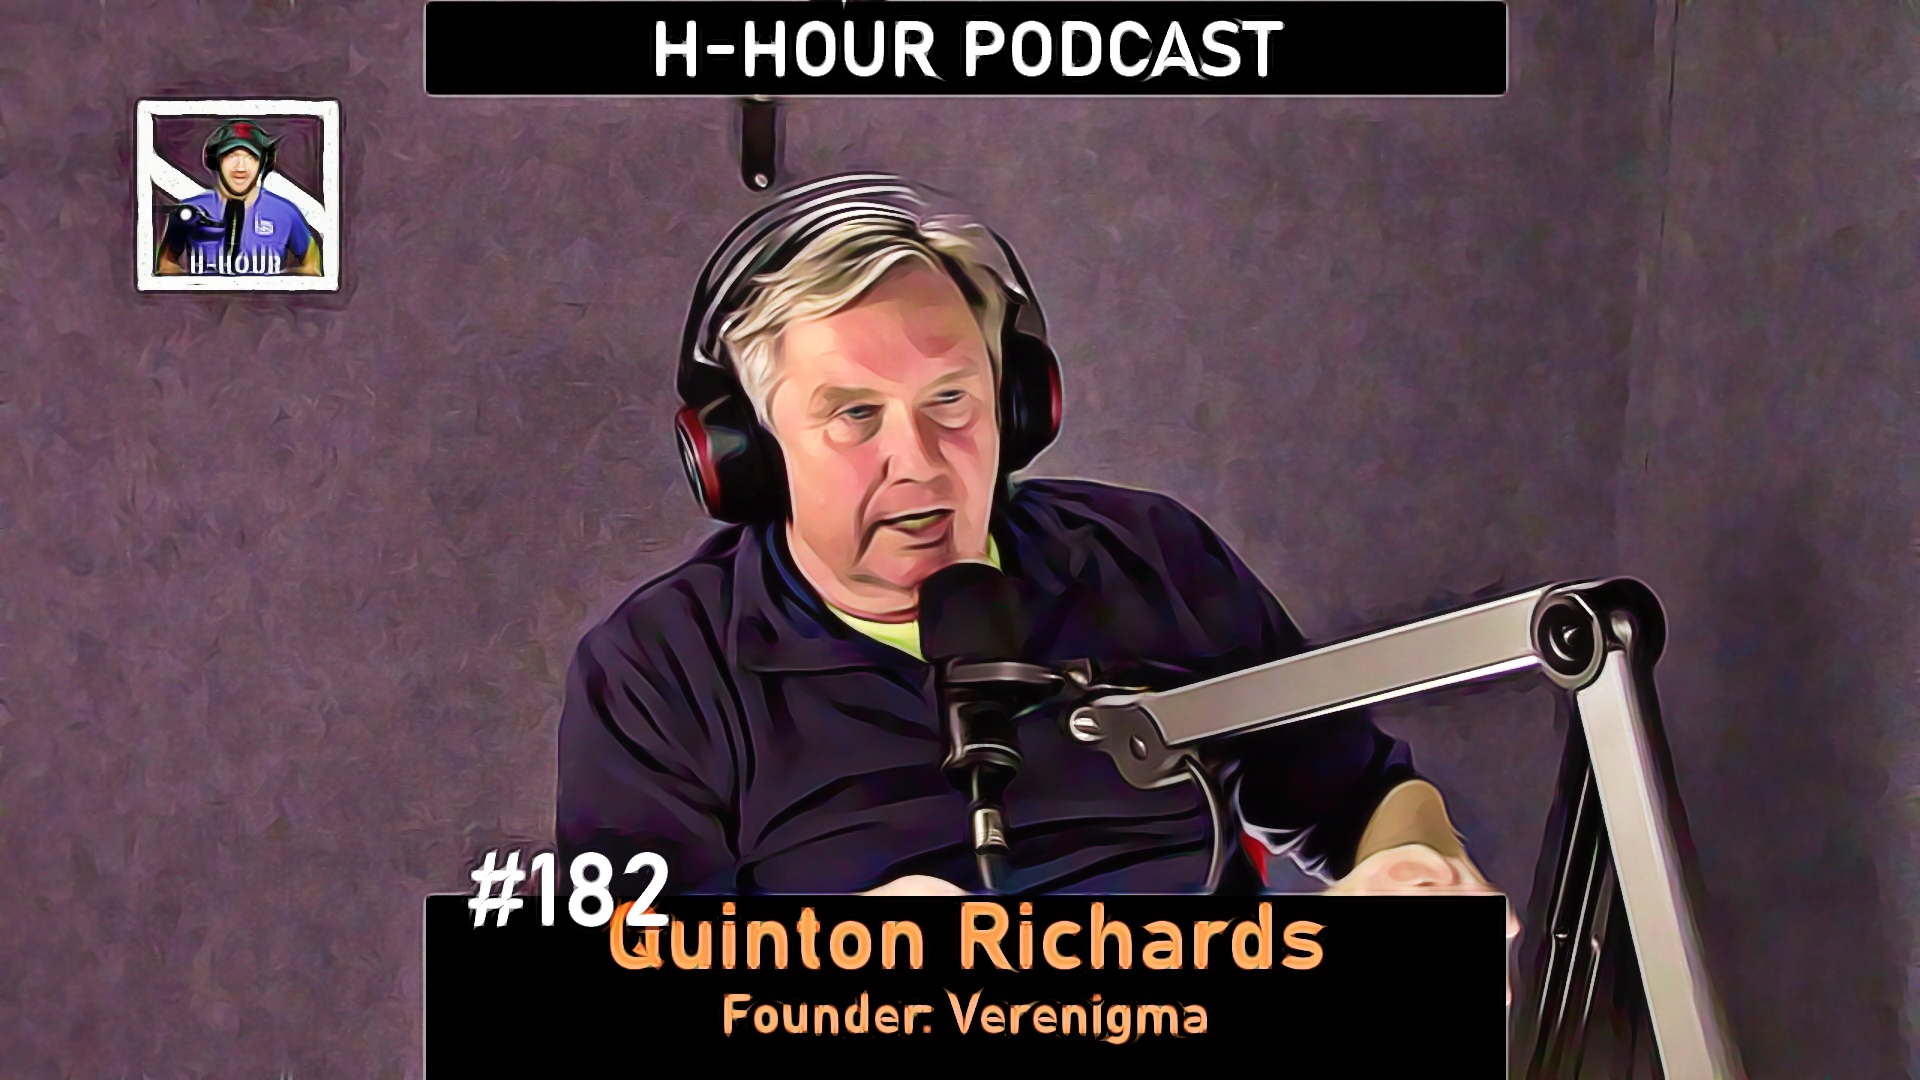 h-hour Podcast NFT #182 quinton richards cover image